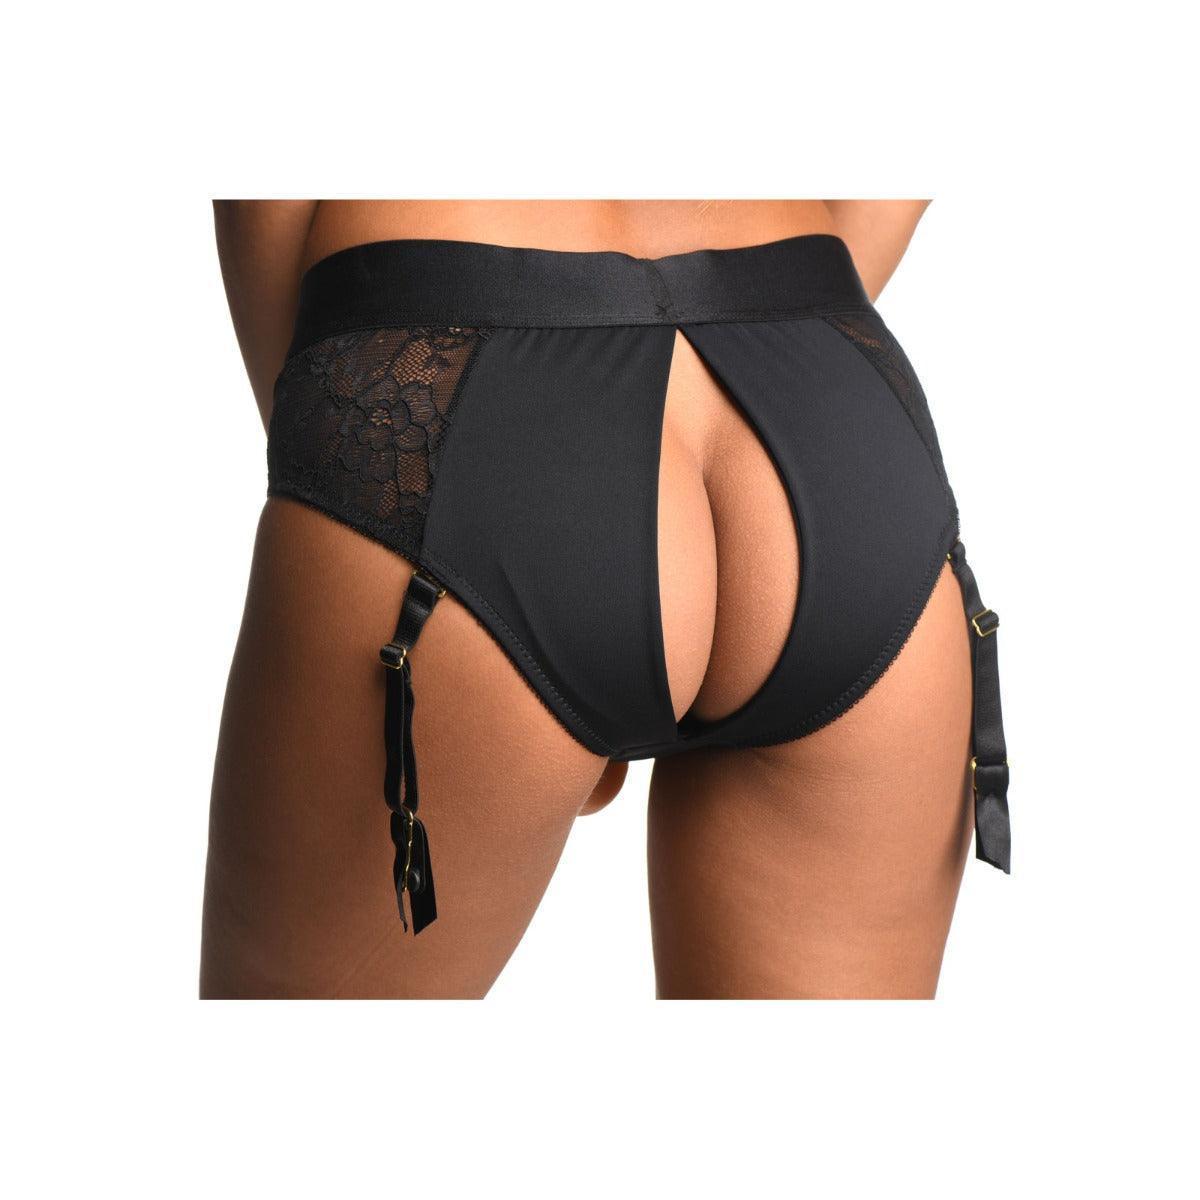 Strap U Laced Seductress S/M Lace Crotchless Panty Harness w/ Garter Straps Black